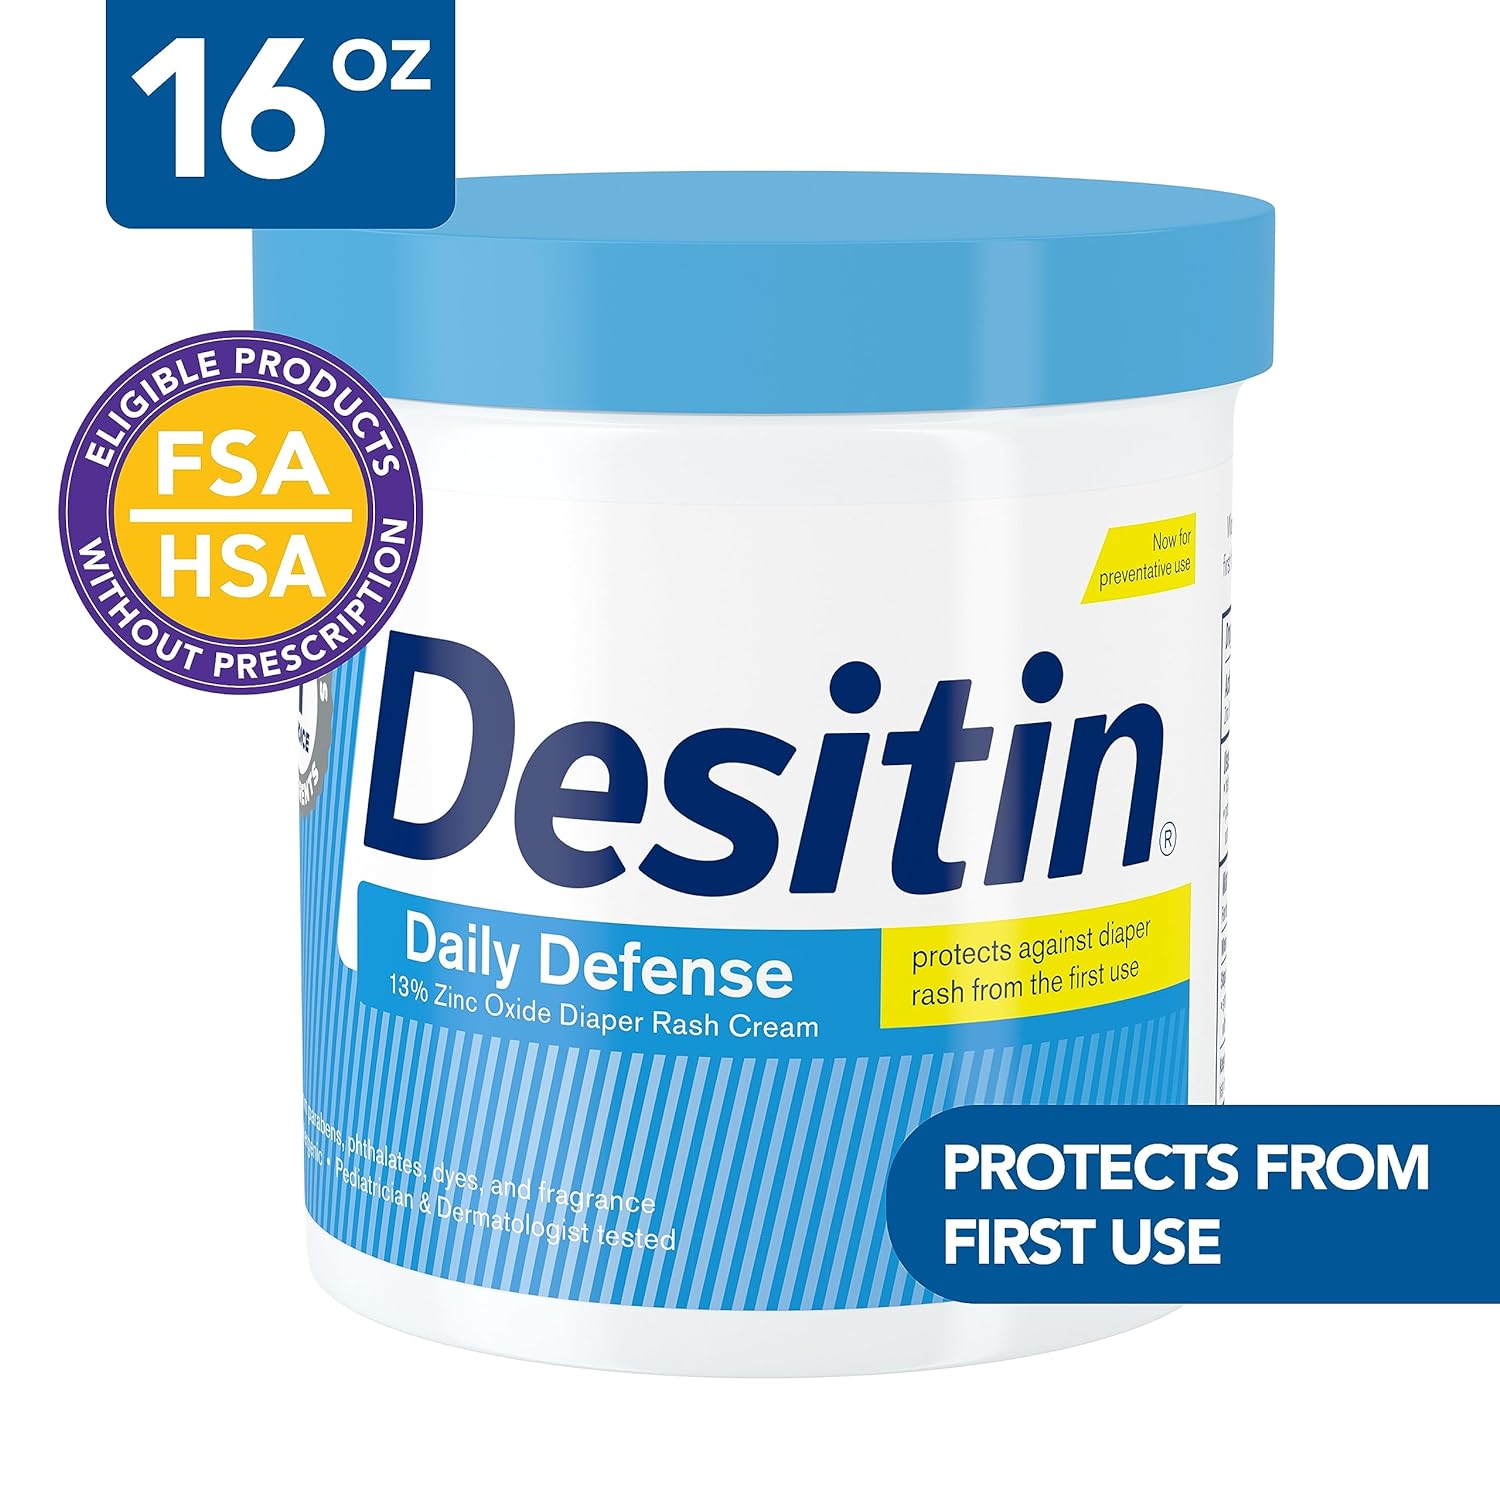 Desitin Daily Defense Baby Diaper Rash Cream with 13% Zinc Oxide, Barrier Cream to Treat, Relieve & Prevent Diaper Rash, Hypoallergenic, Dye-, Phthalate- & Paraben-Free, 16 oz